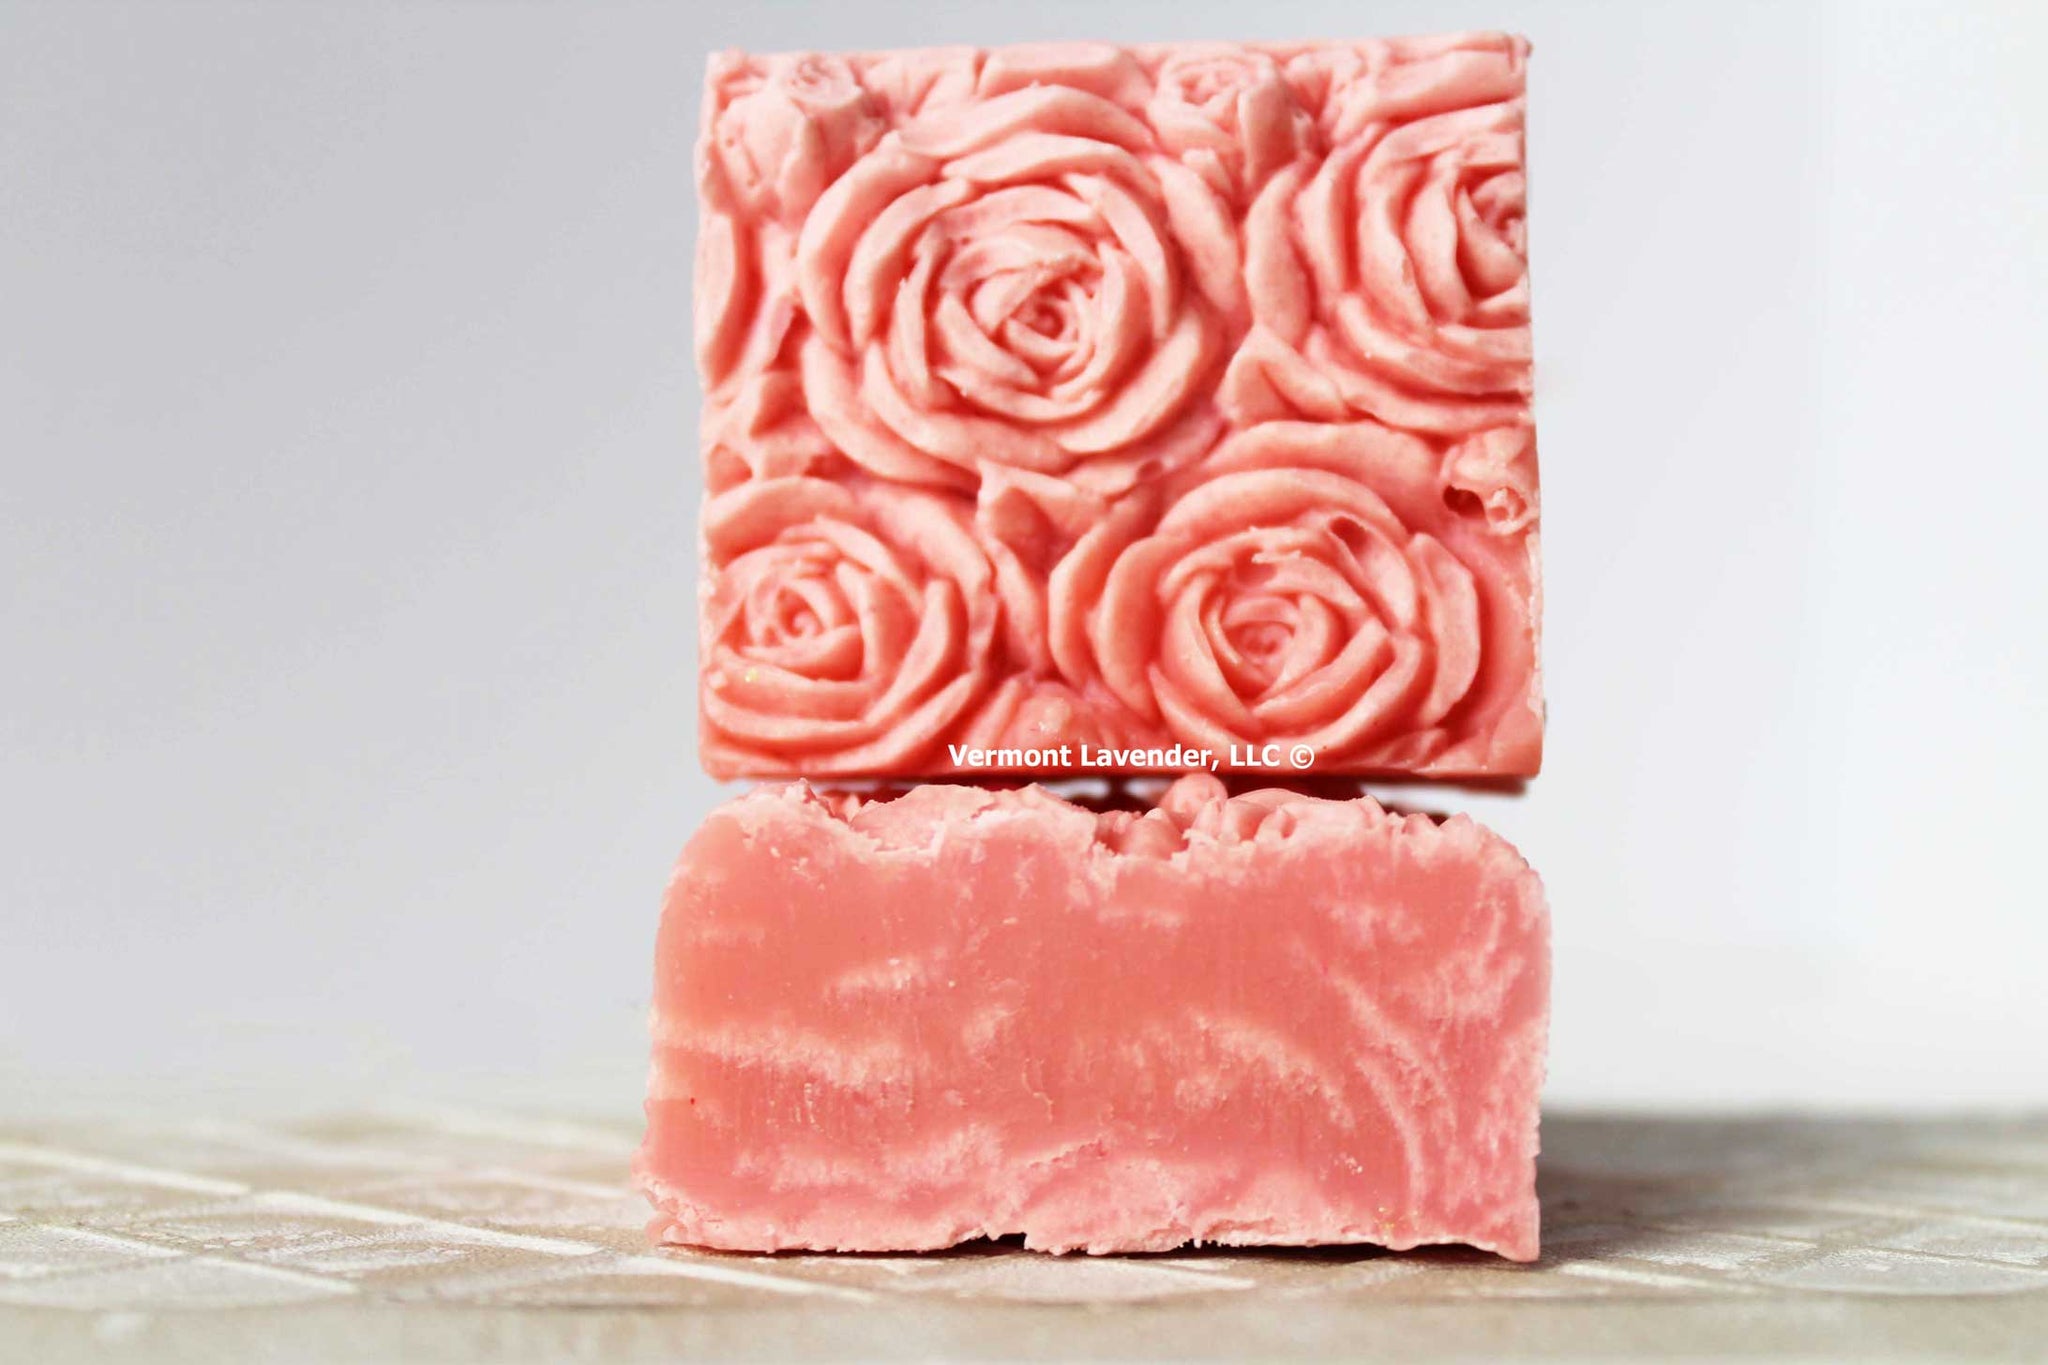 Hand Soaps | Floral Love Rose Soap | Love, Devotion, Kindness | Mother's Love